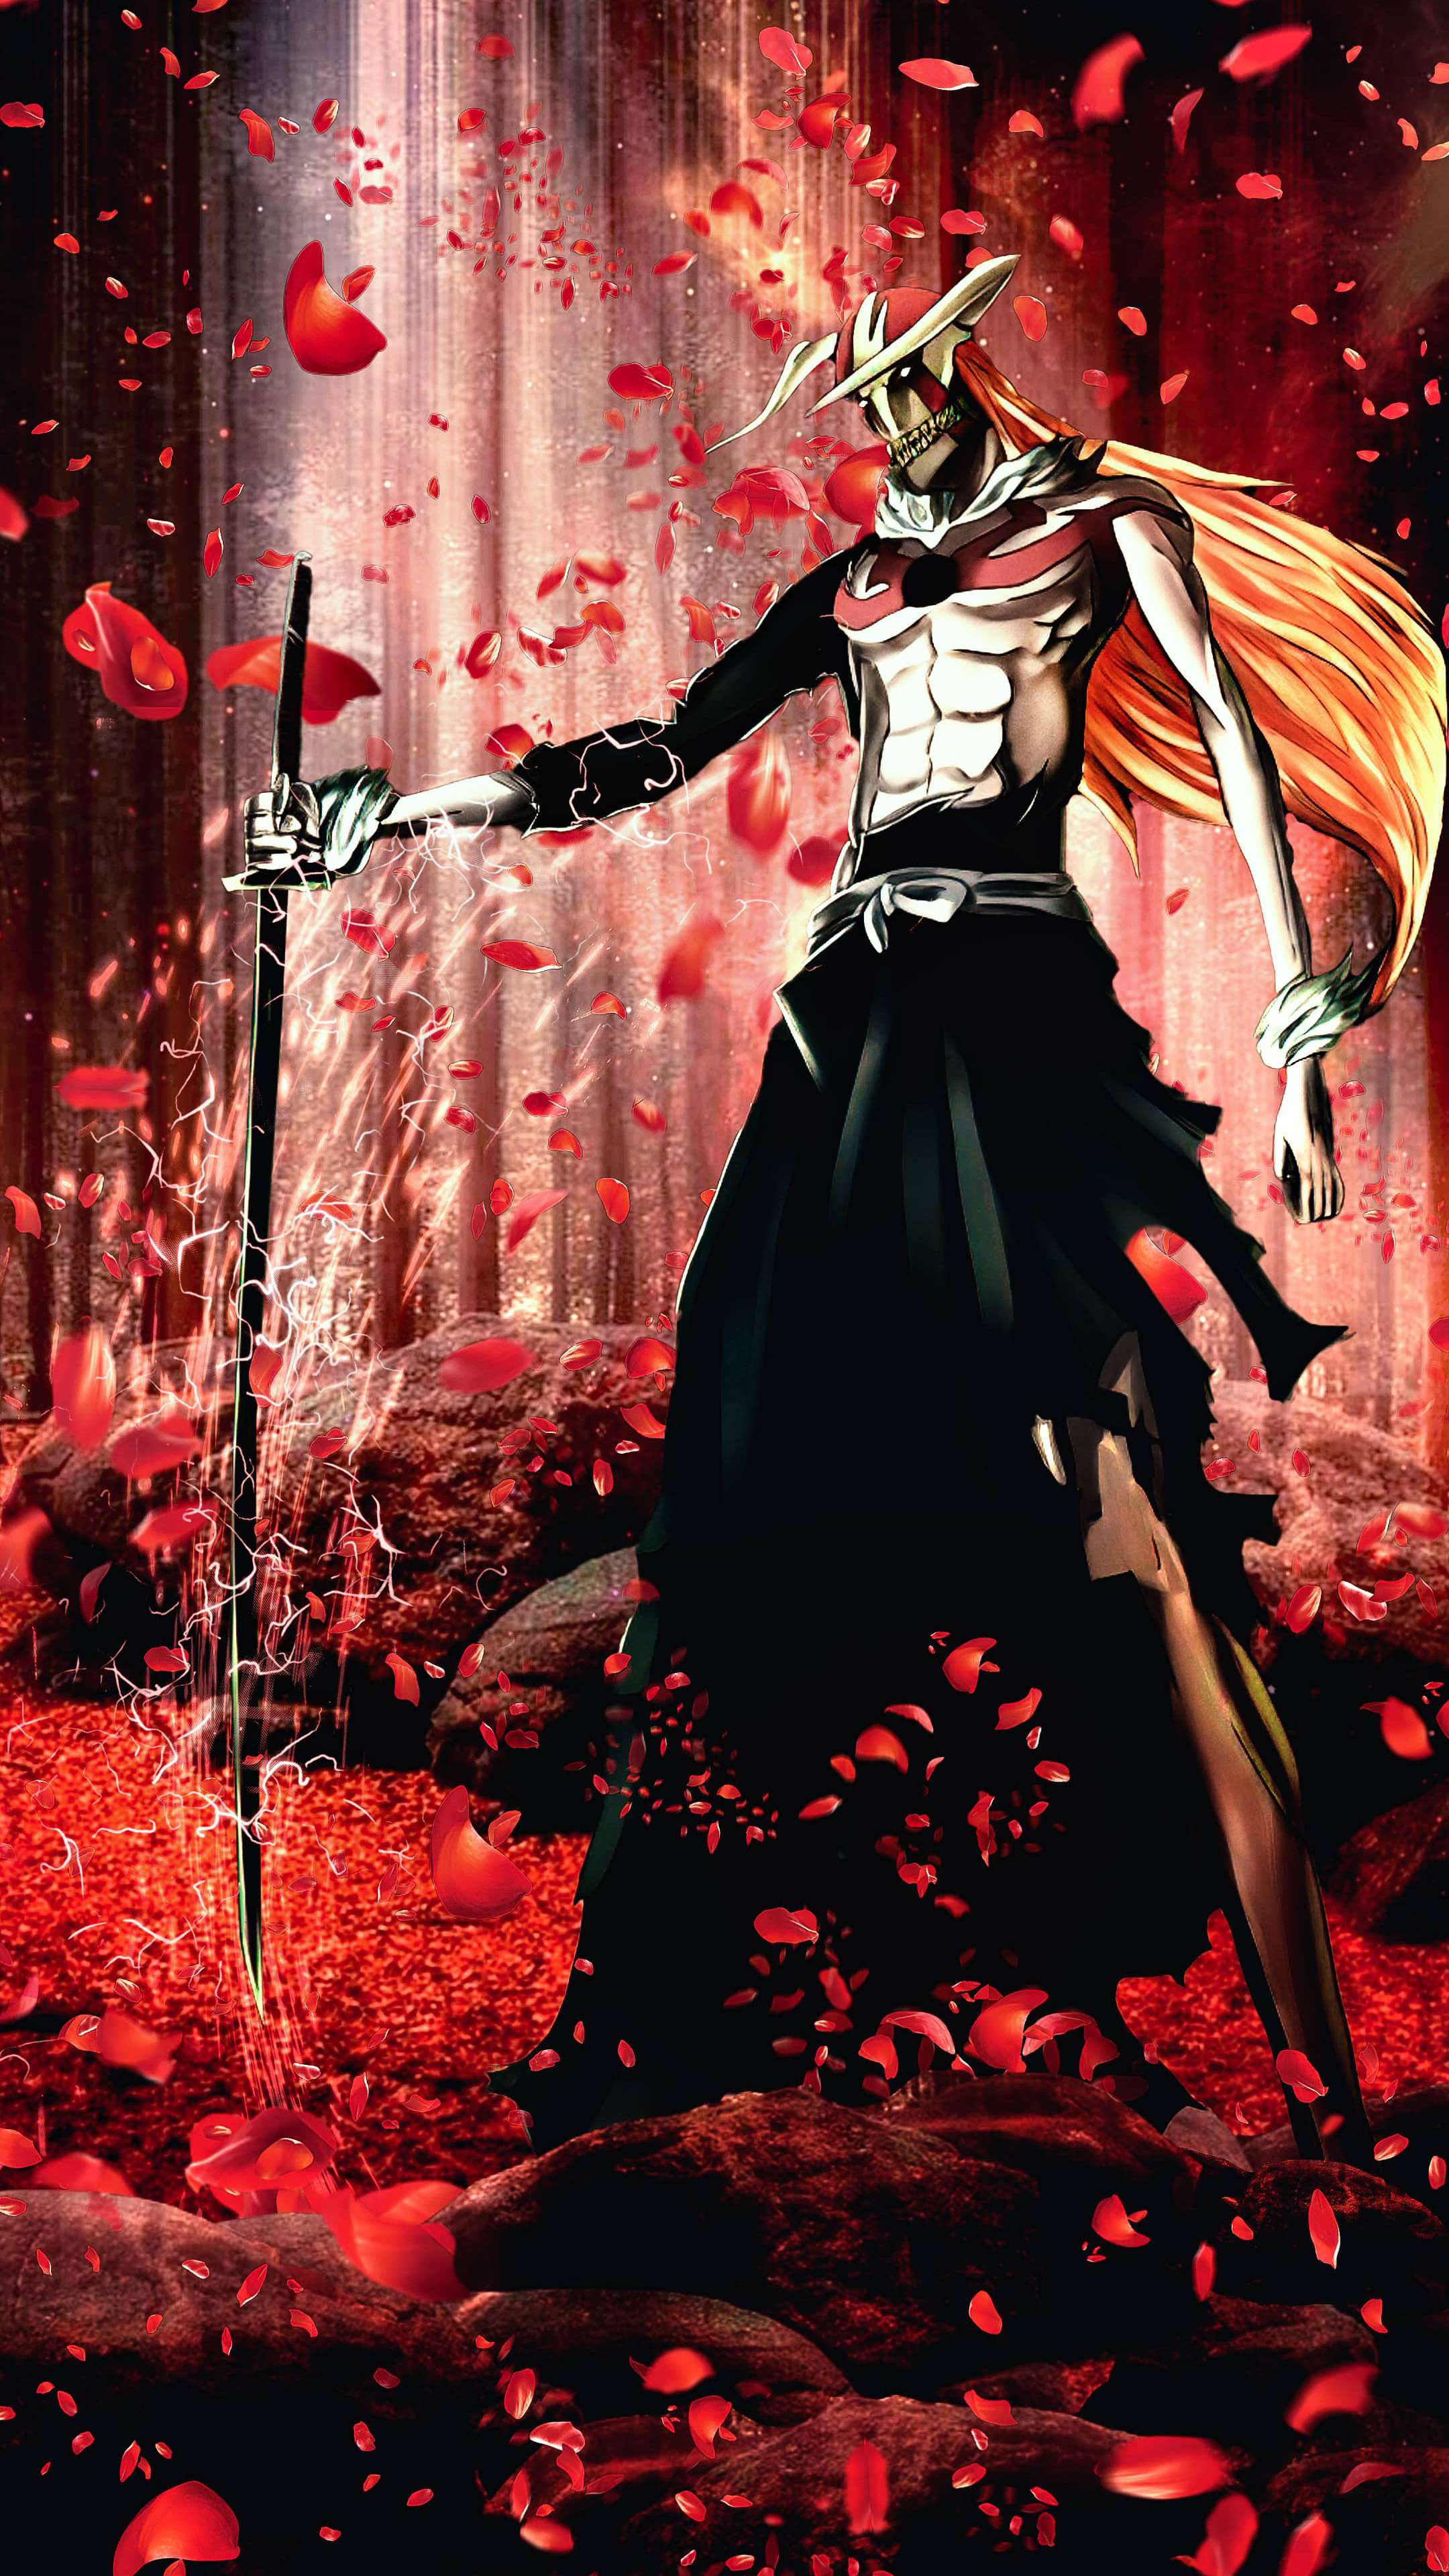 Vasto Lorde wallpaper by Hohem - Download on ZEDGE™